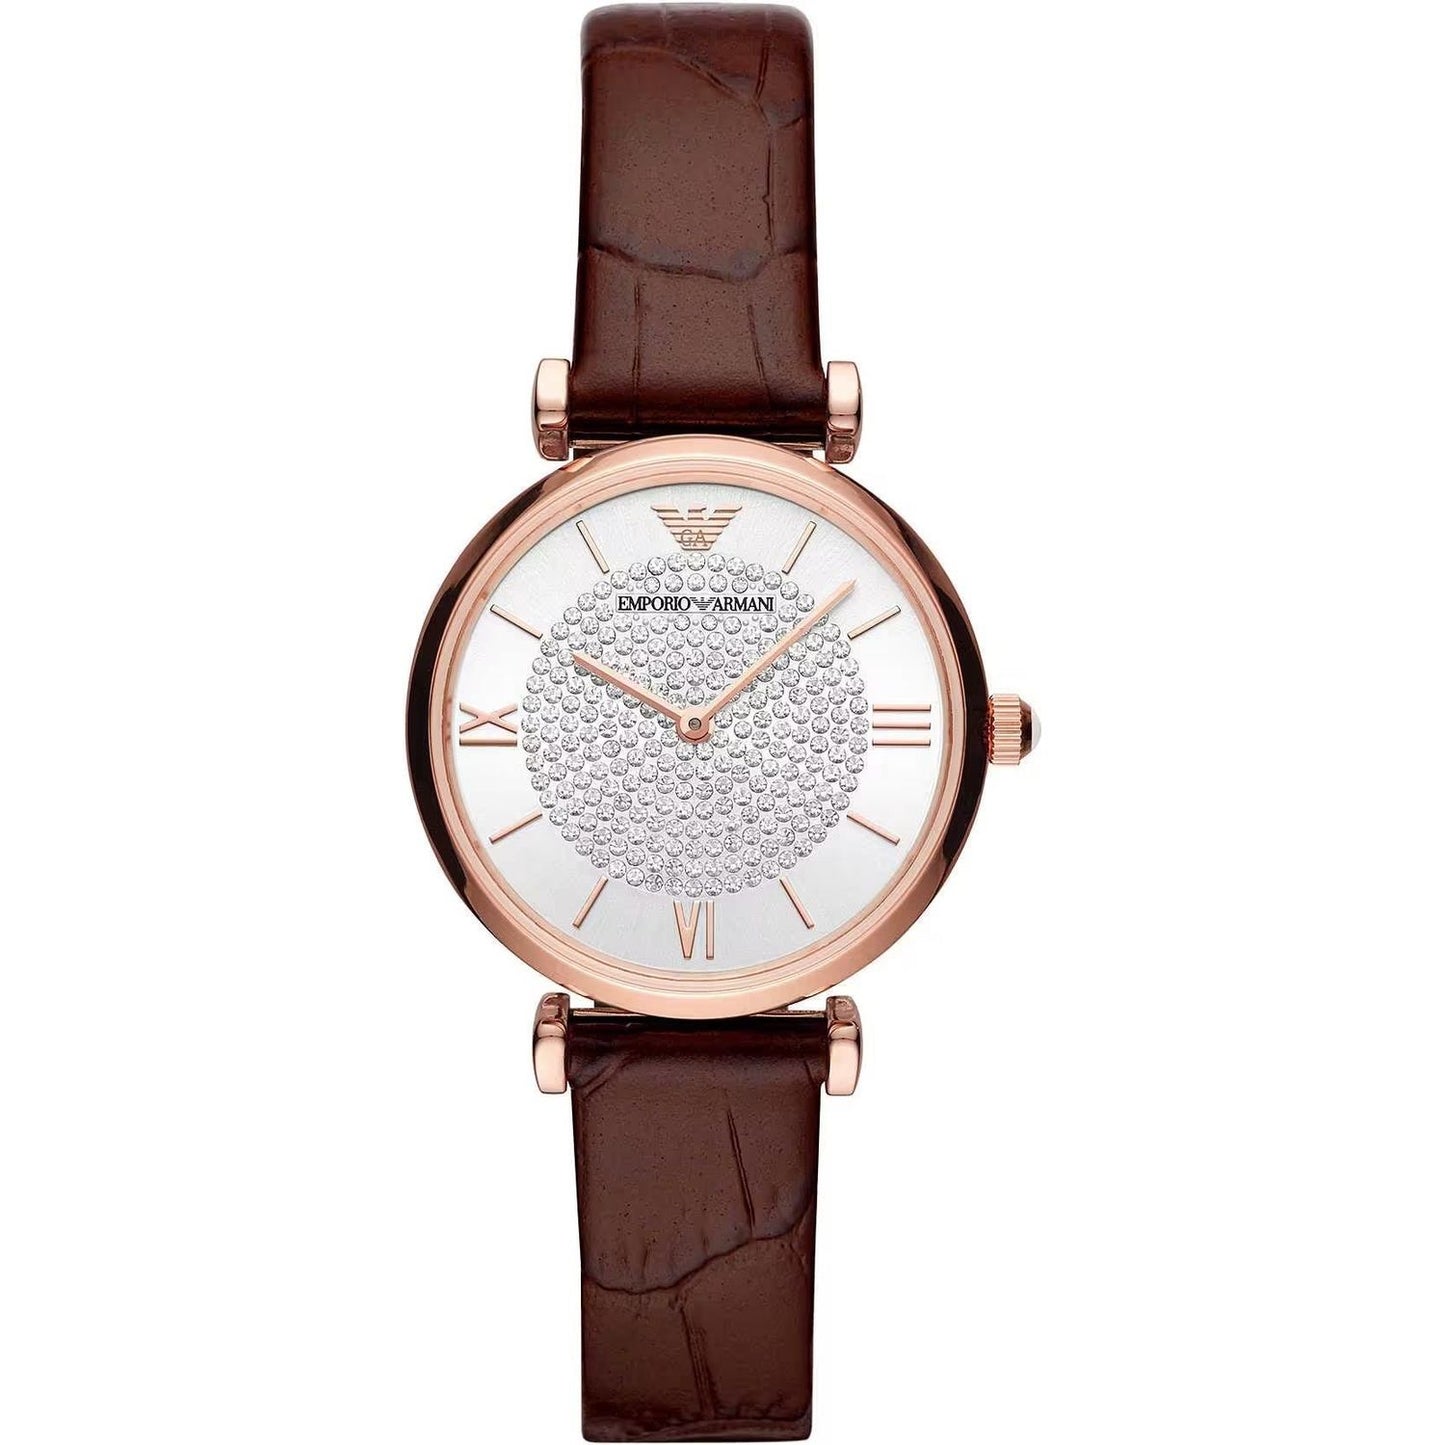 Emporio ArmaniElegant Bordeaux Leather Watch for WomenMcRichard Designer Brands£269.00